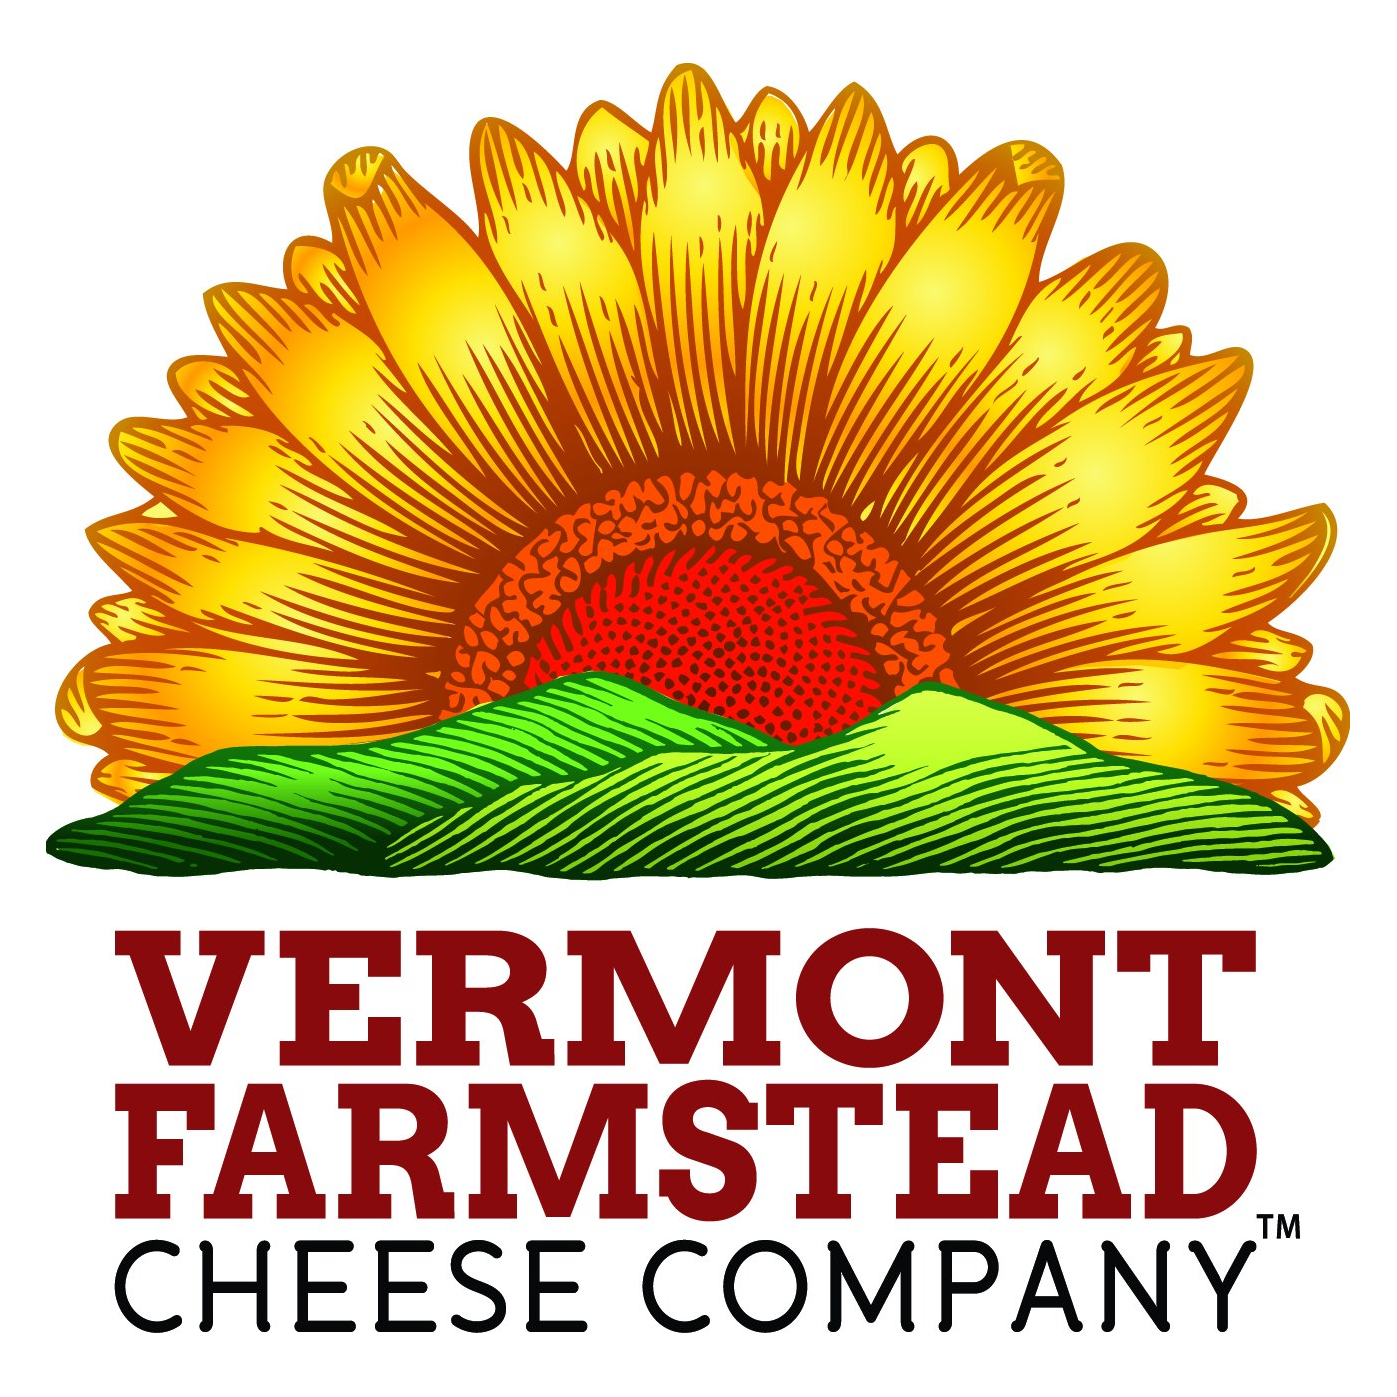 Vermont Farmstead